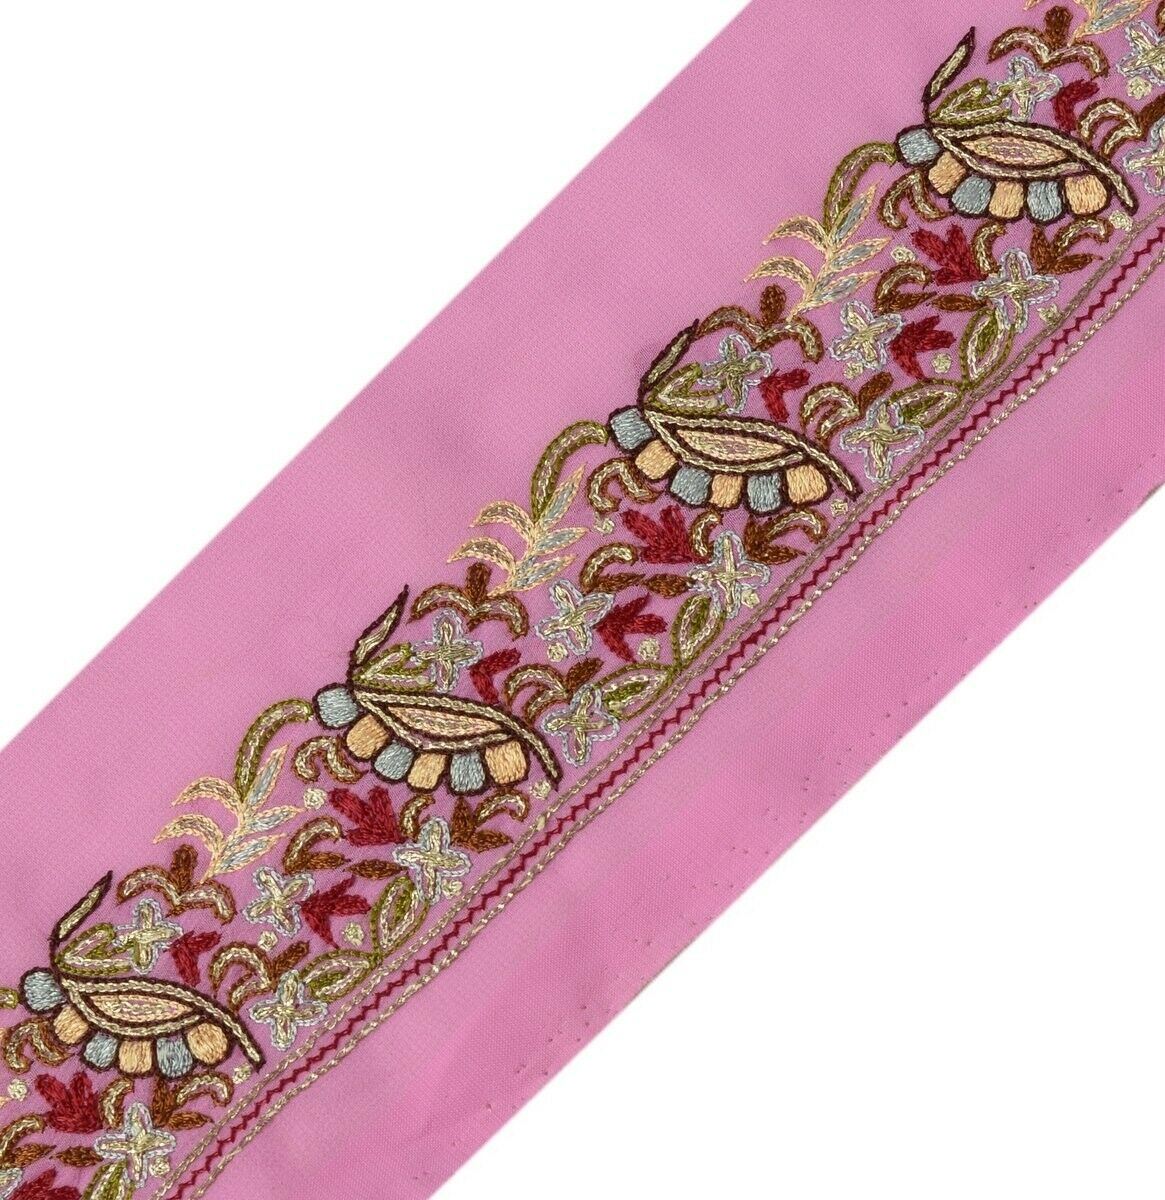 Vintage Sari Border Indian Craft Trim Embroidered Sewing Ribbon Lace Magenta